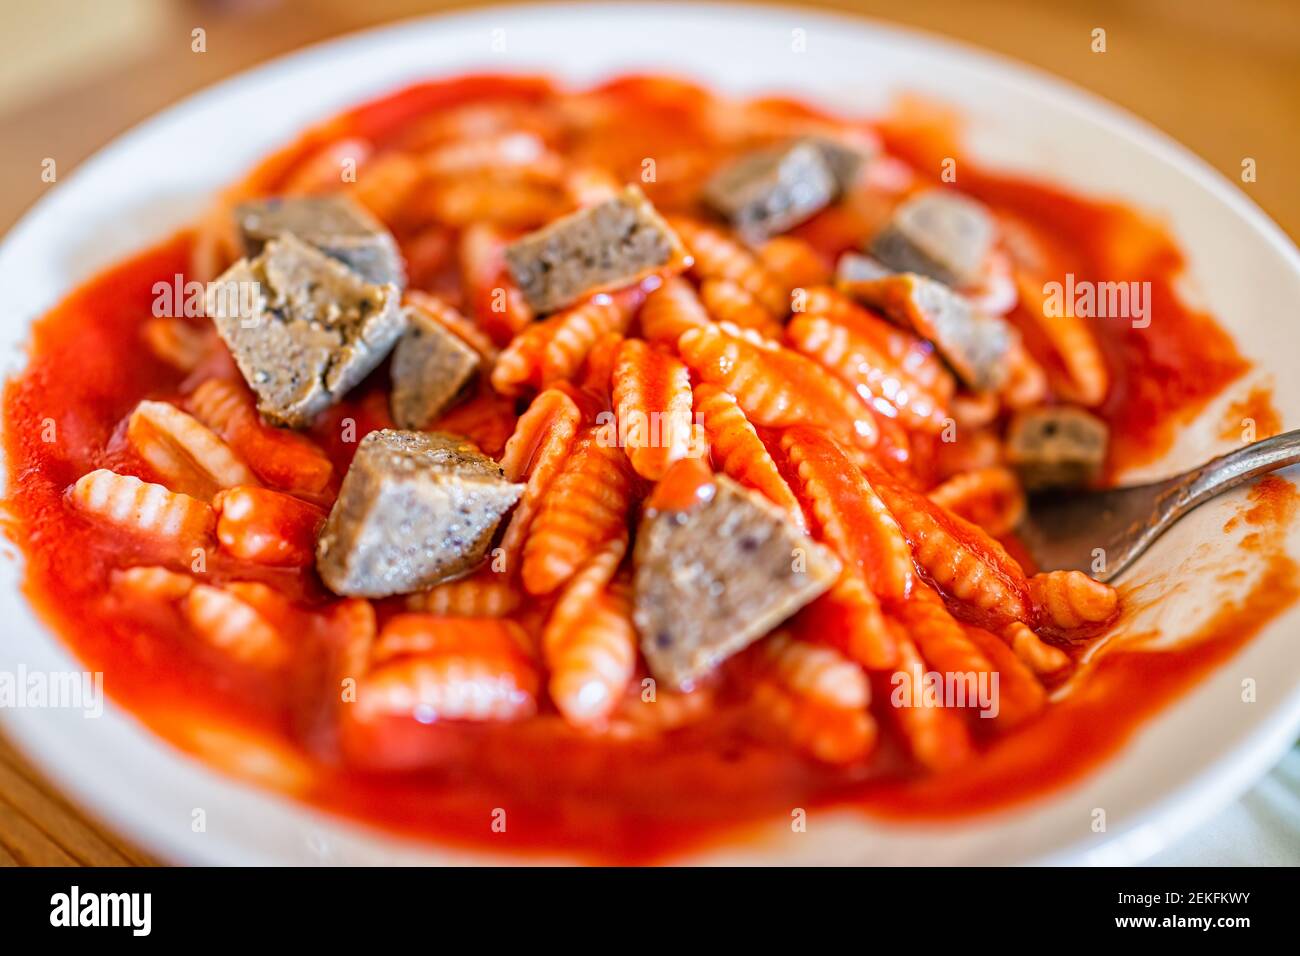 Closeup of bowl with vegan sausage pieces and pasta gnocchi sardi Sardinian shape with red tomato marinara sauce with fork or spoon Stock Photo